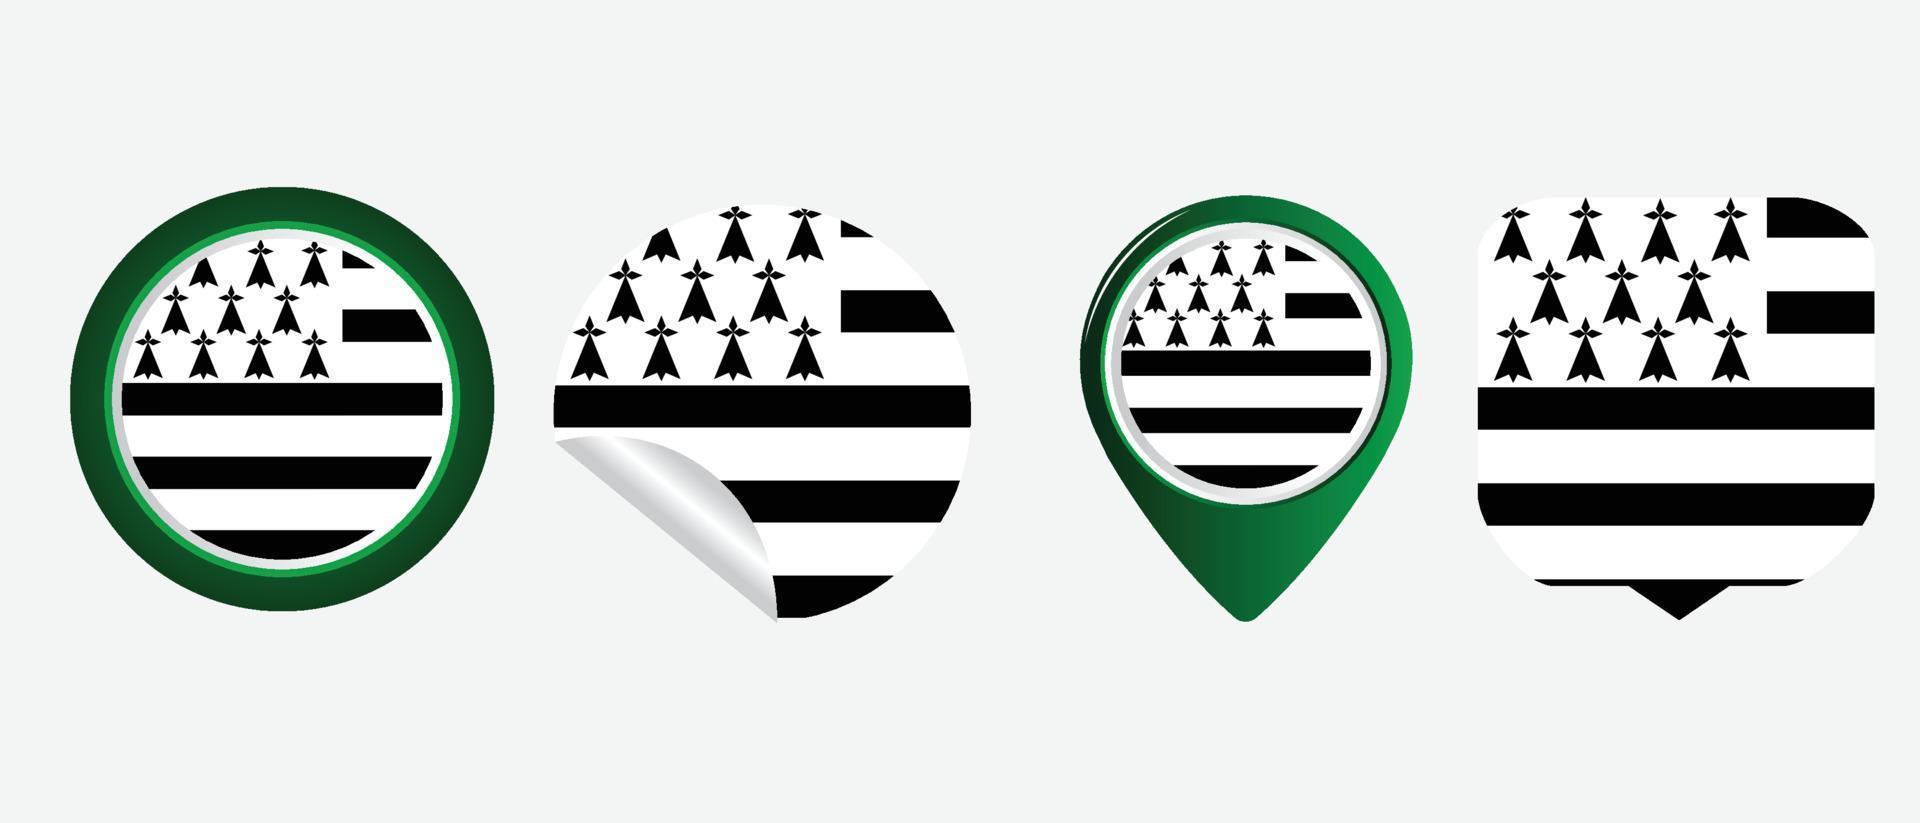 Brittany flag. flat icon symbol vector illustration